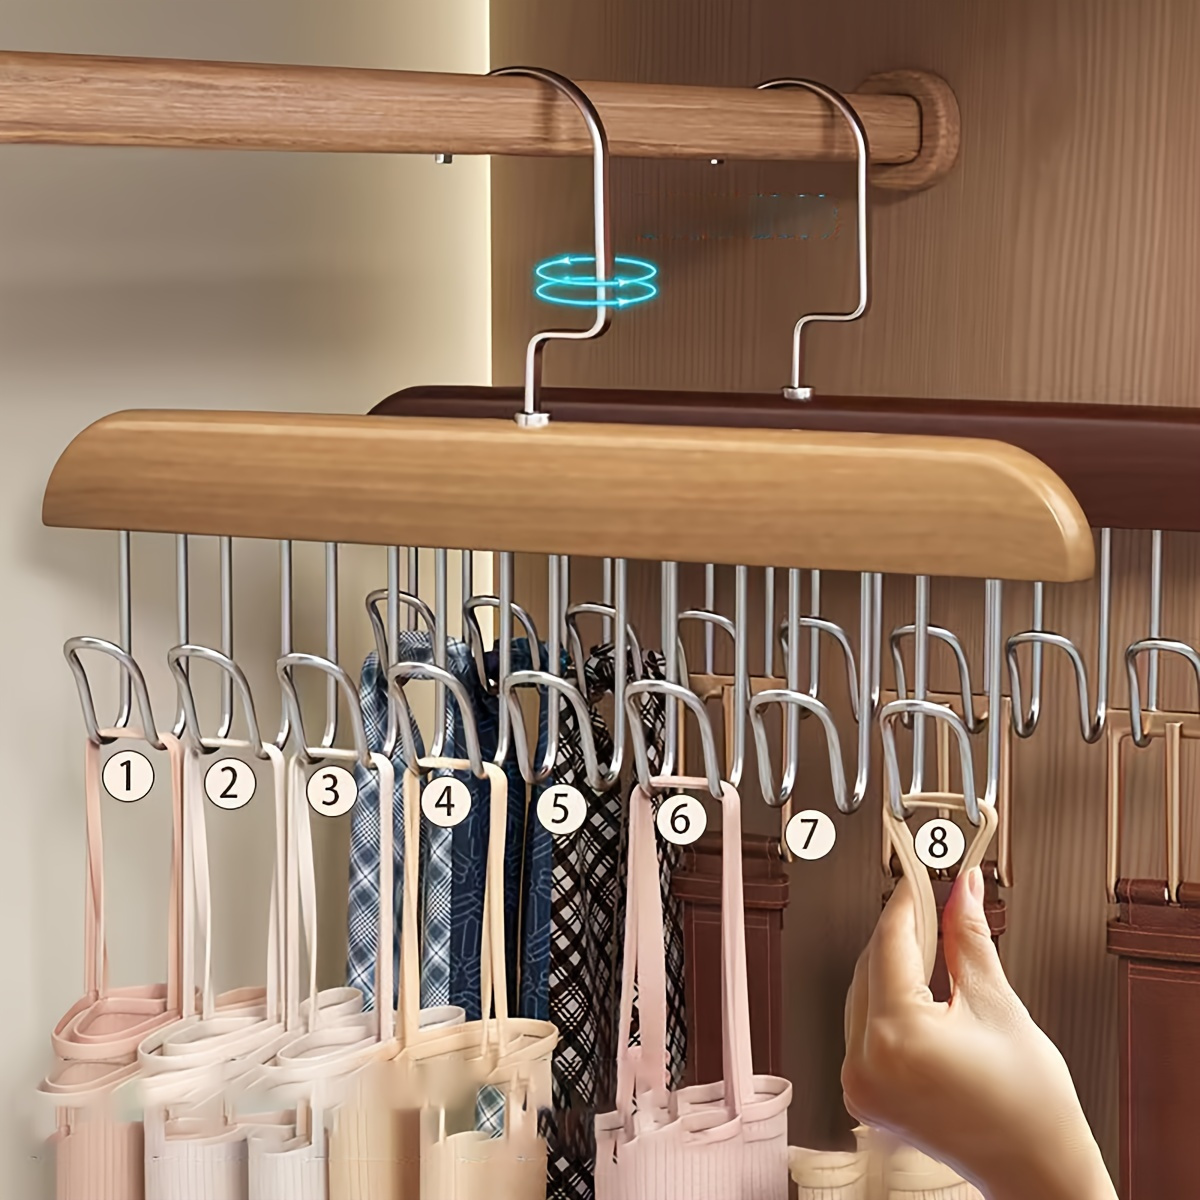 

1pc Wooden Hangers, With 8 Metal Hooks, Smooth Retro Finish Wood Suit Hanger Coat Hanger For Closet, For Ties, Hats, Belts, Suspenders, Dress Clothes Hangers